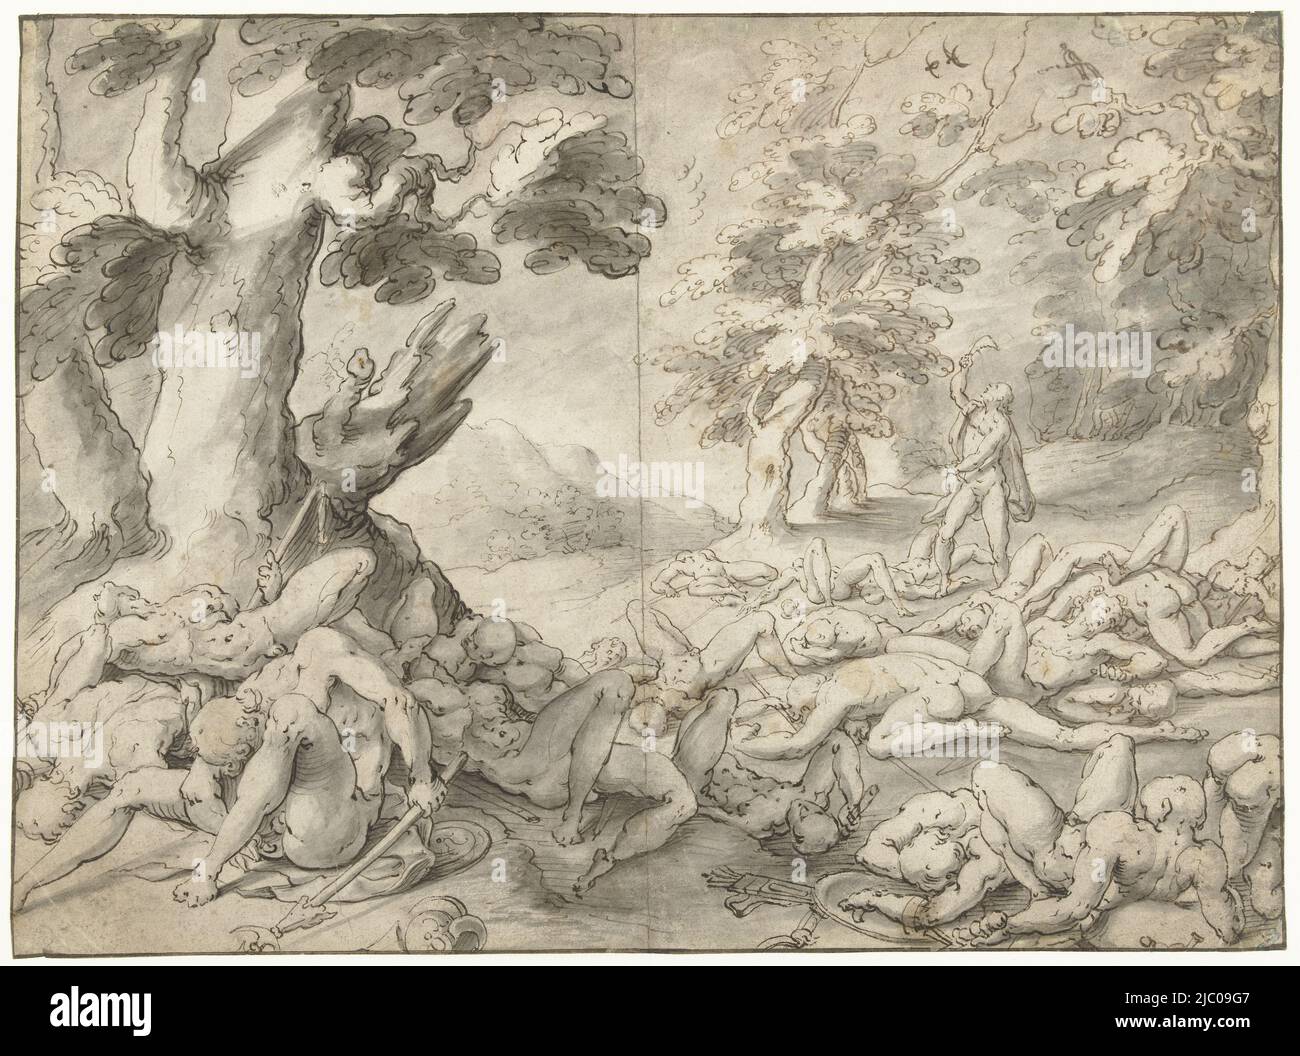 Samson after defeating the Philistines, draughtsman: Gerrit Pietersz. Sweelink, 1576 - 1656, paper, pen, brush, h 280 mm × w 380 mm Stock Photo